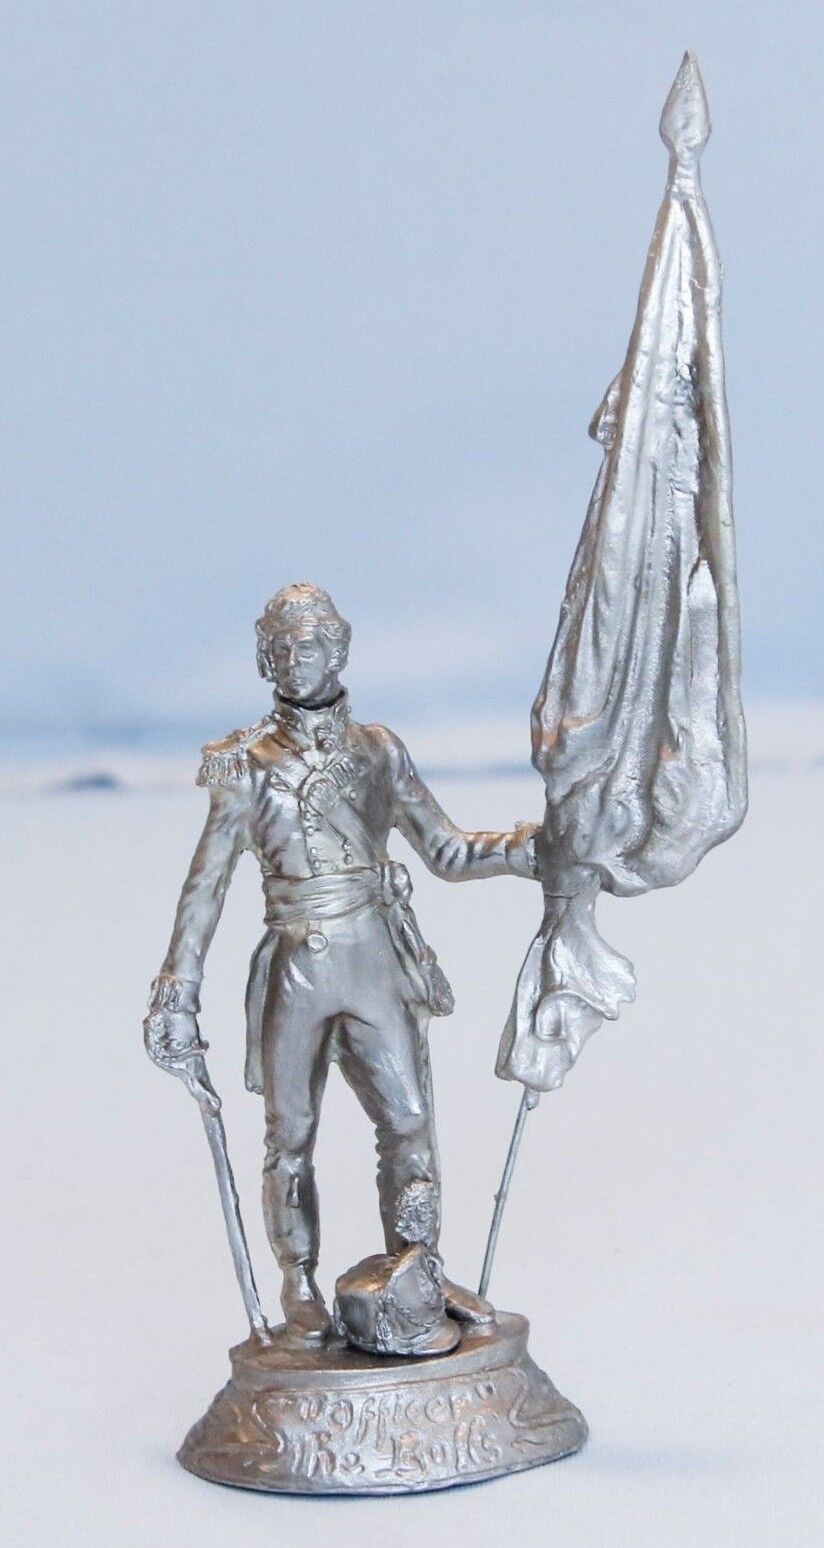 Miniature Metal Soldier Figure of Buffs British Regiment Napoleon